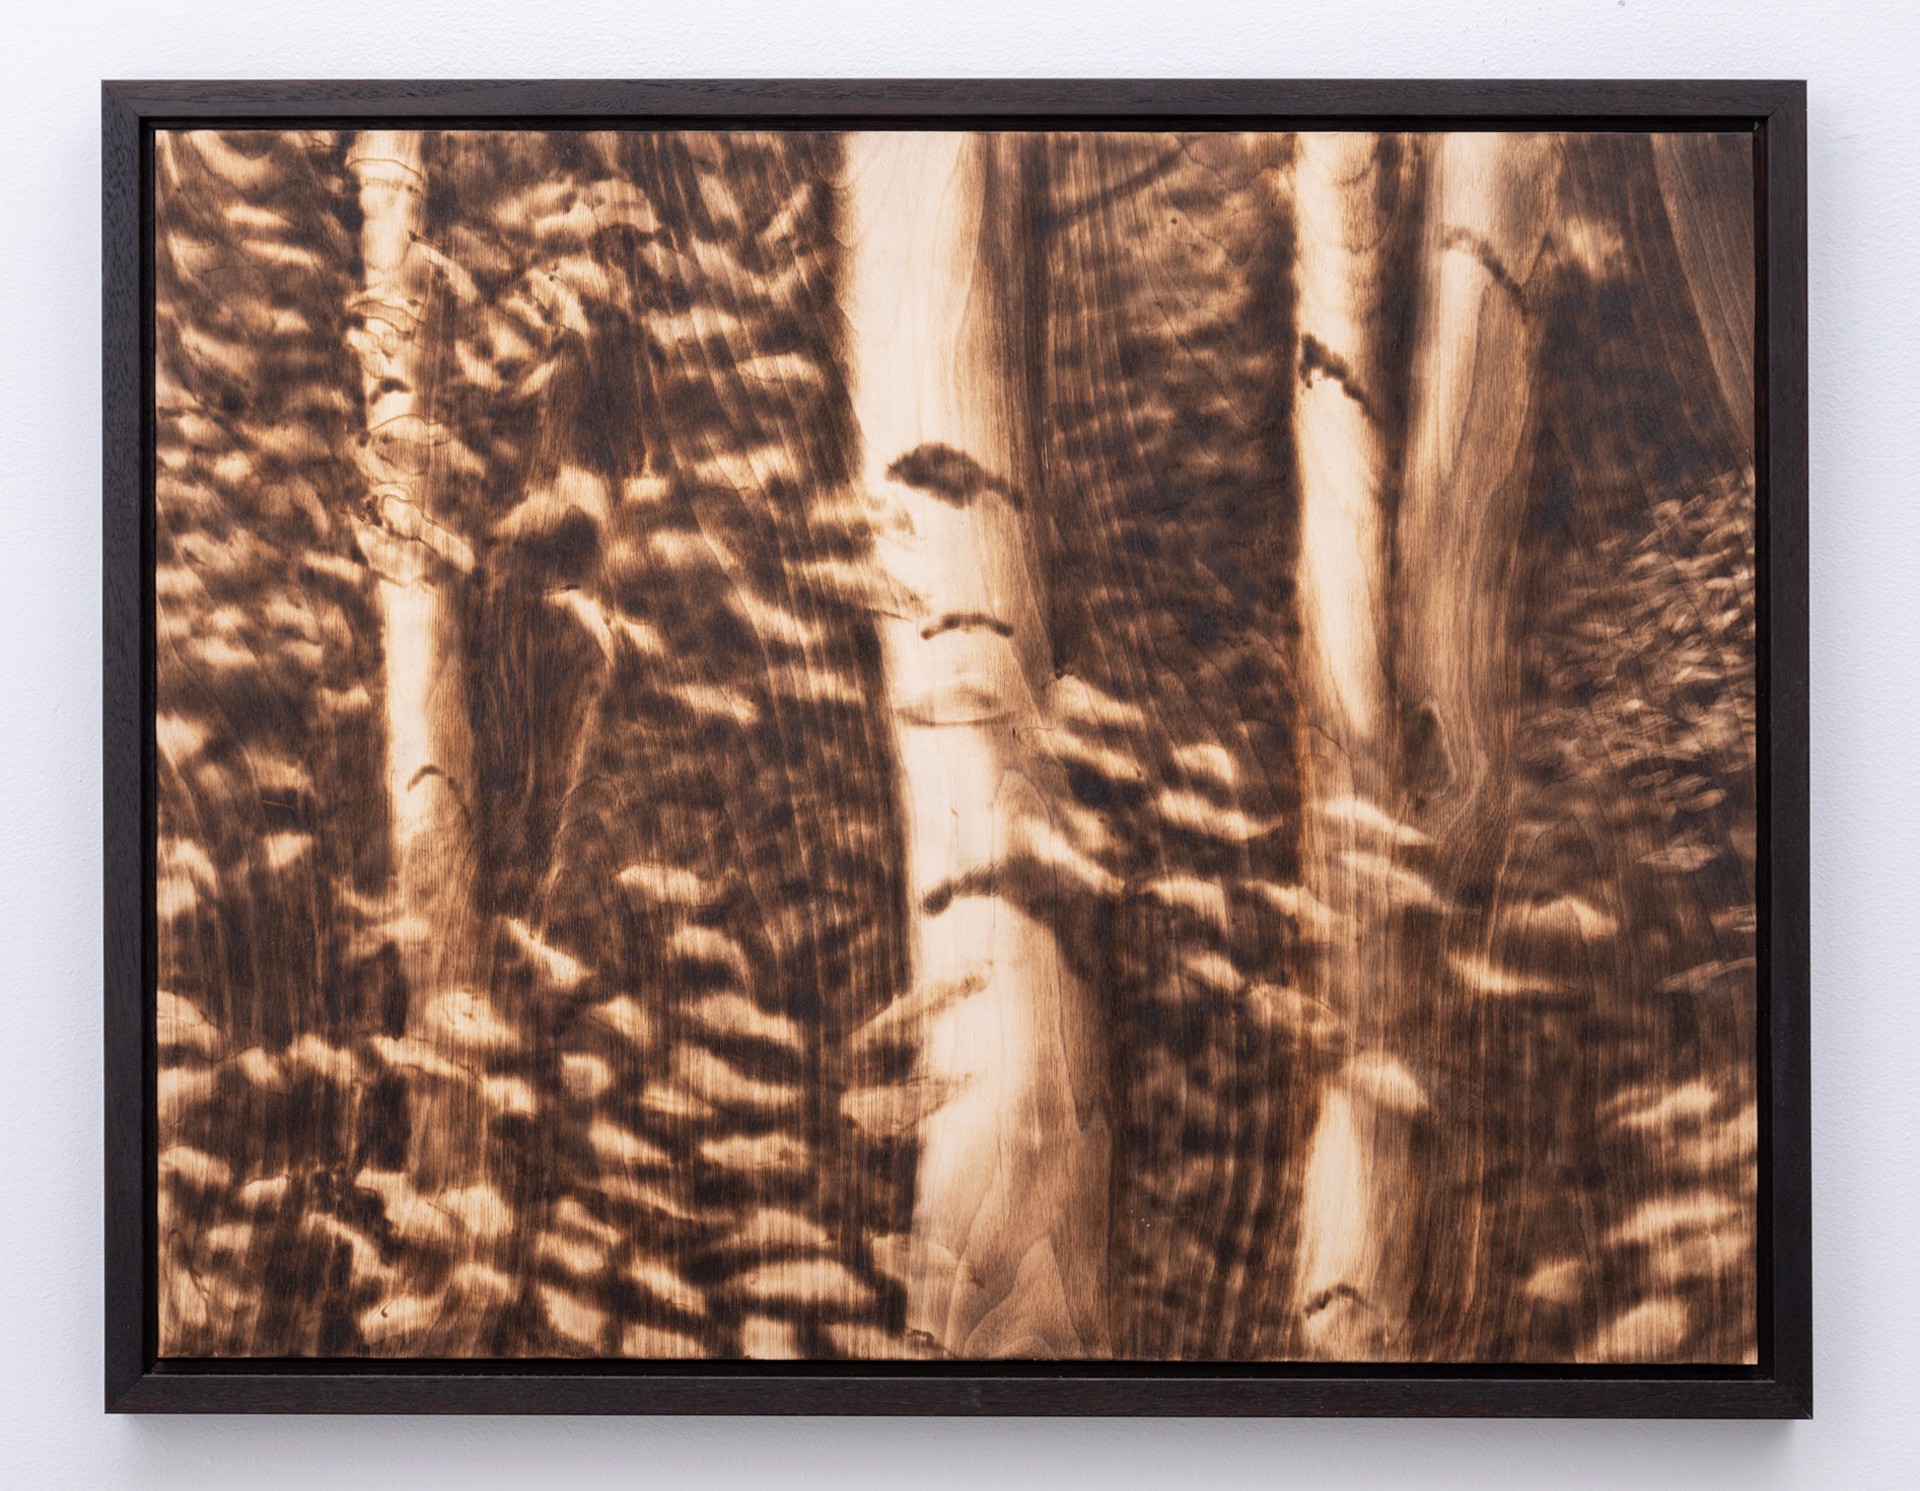 Amongst the Birches #8 by Paul Chojnowski